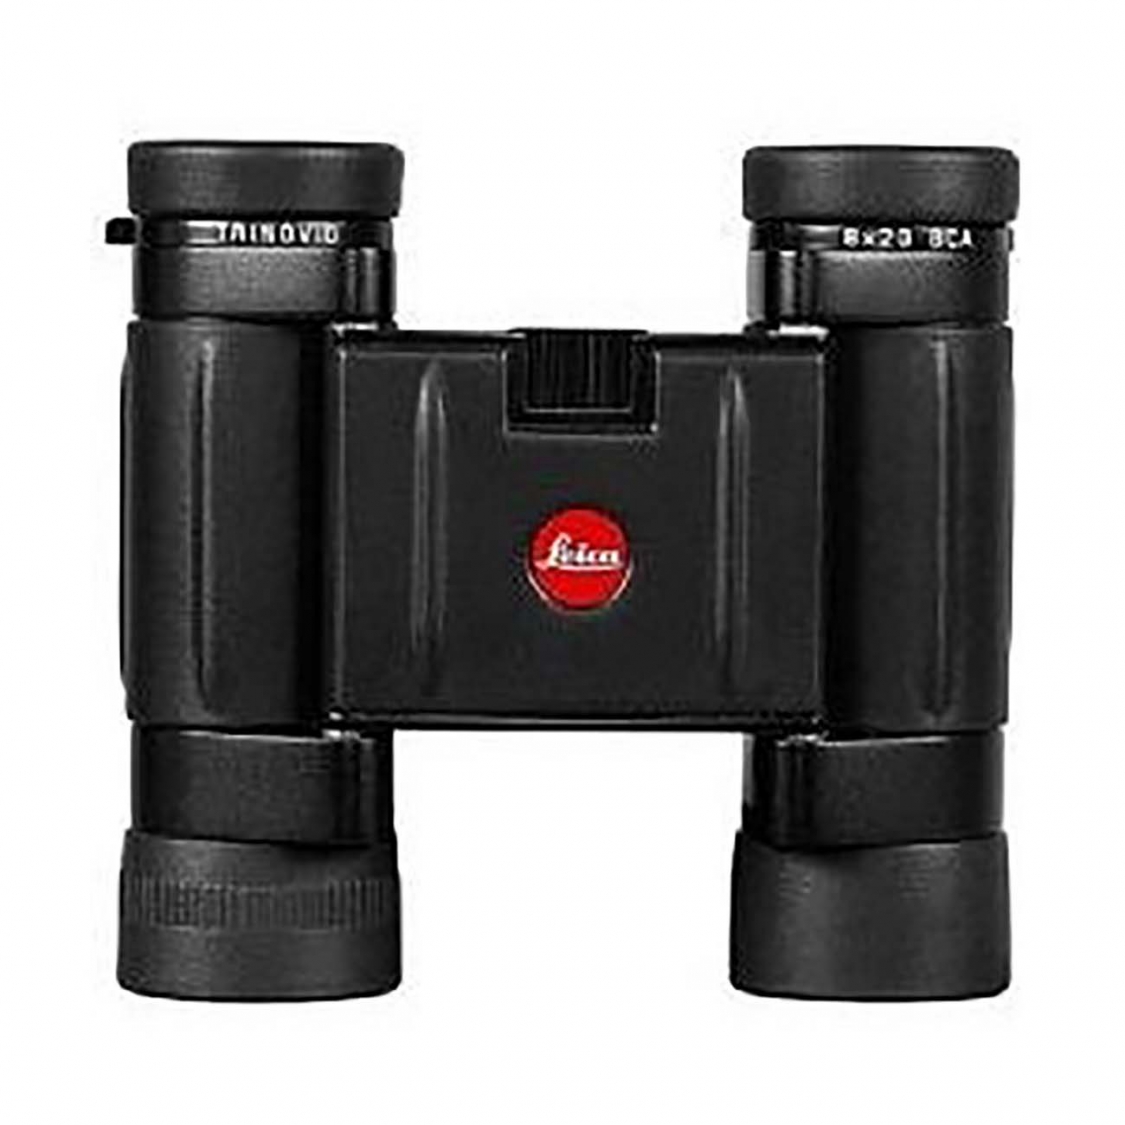 Leica Trinovid 8x20 BCA Binoculars (black)